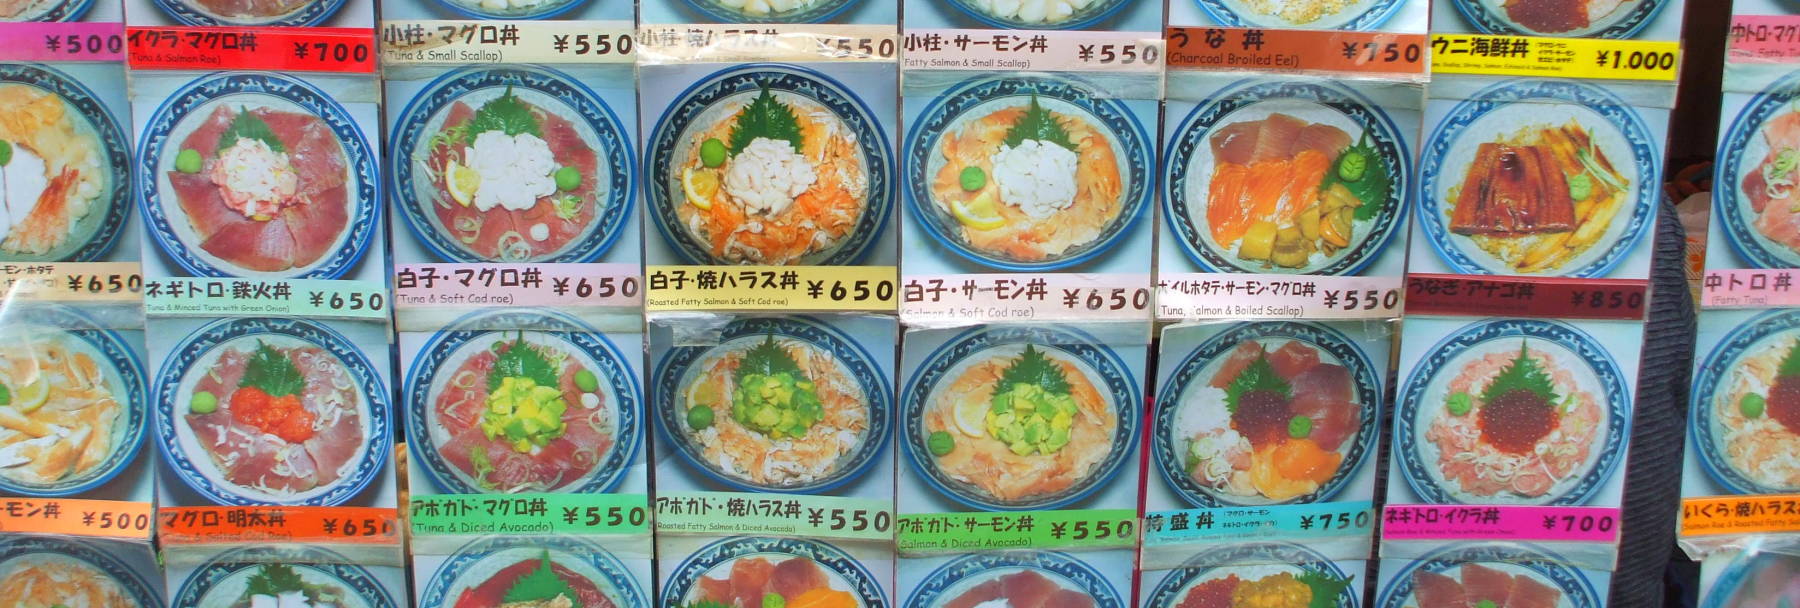 Visual menu in Ameya-Yokochō, between Ueno Station and Akihabara in Tōkyō.